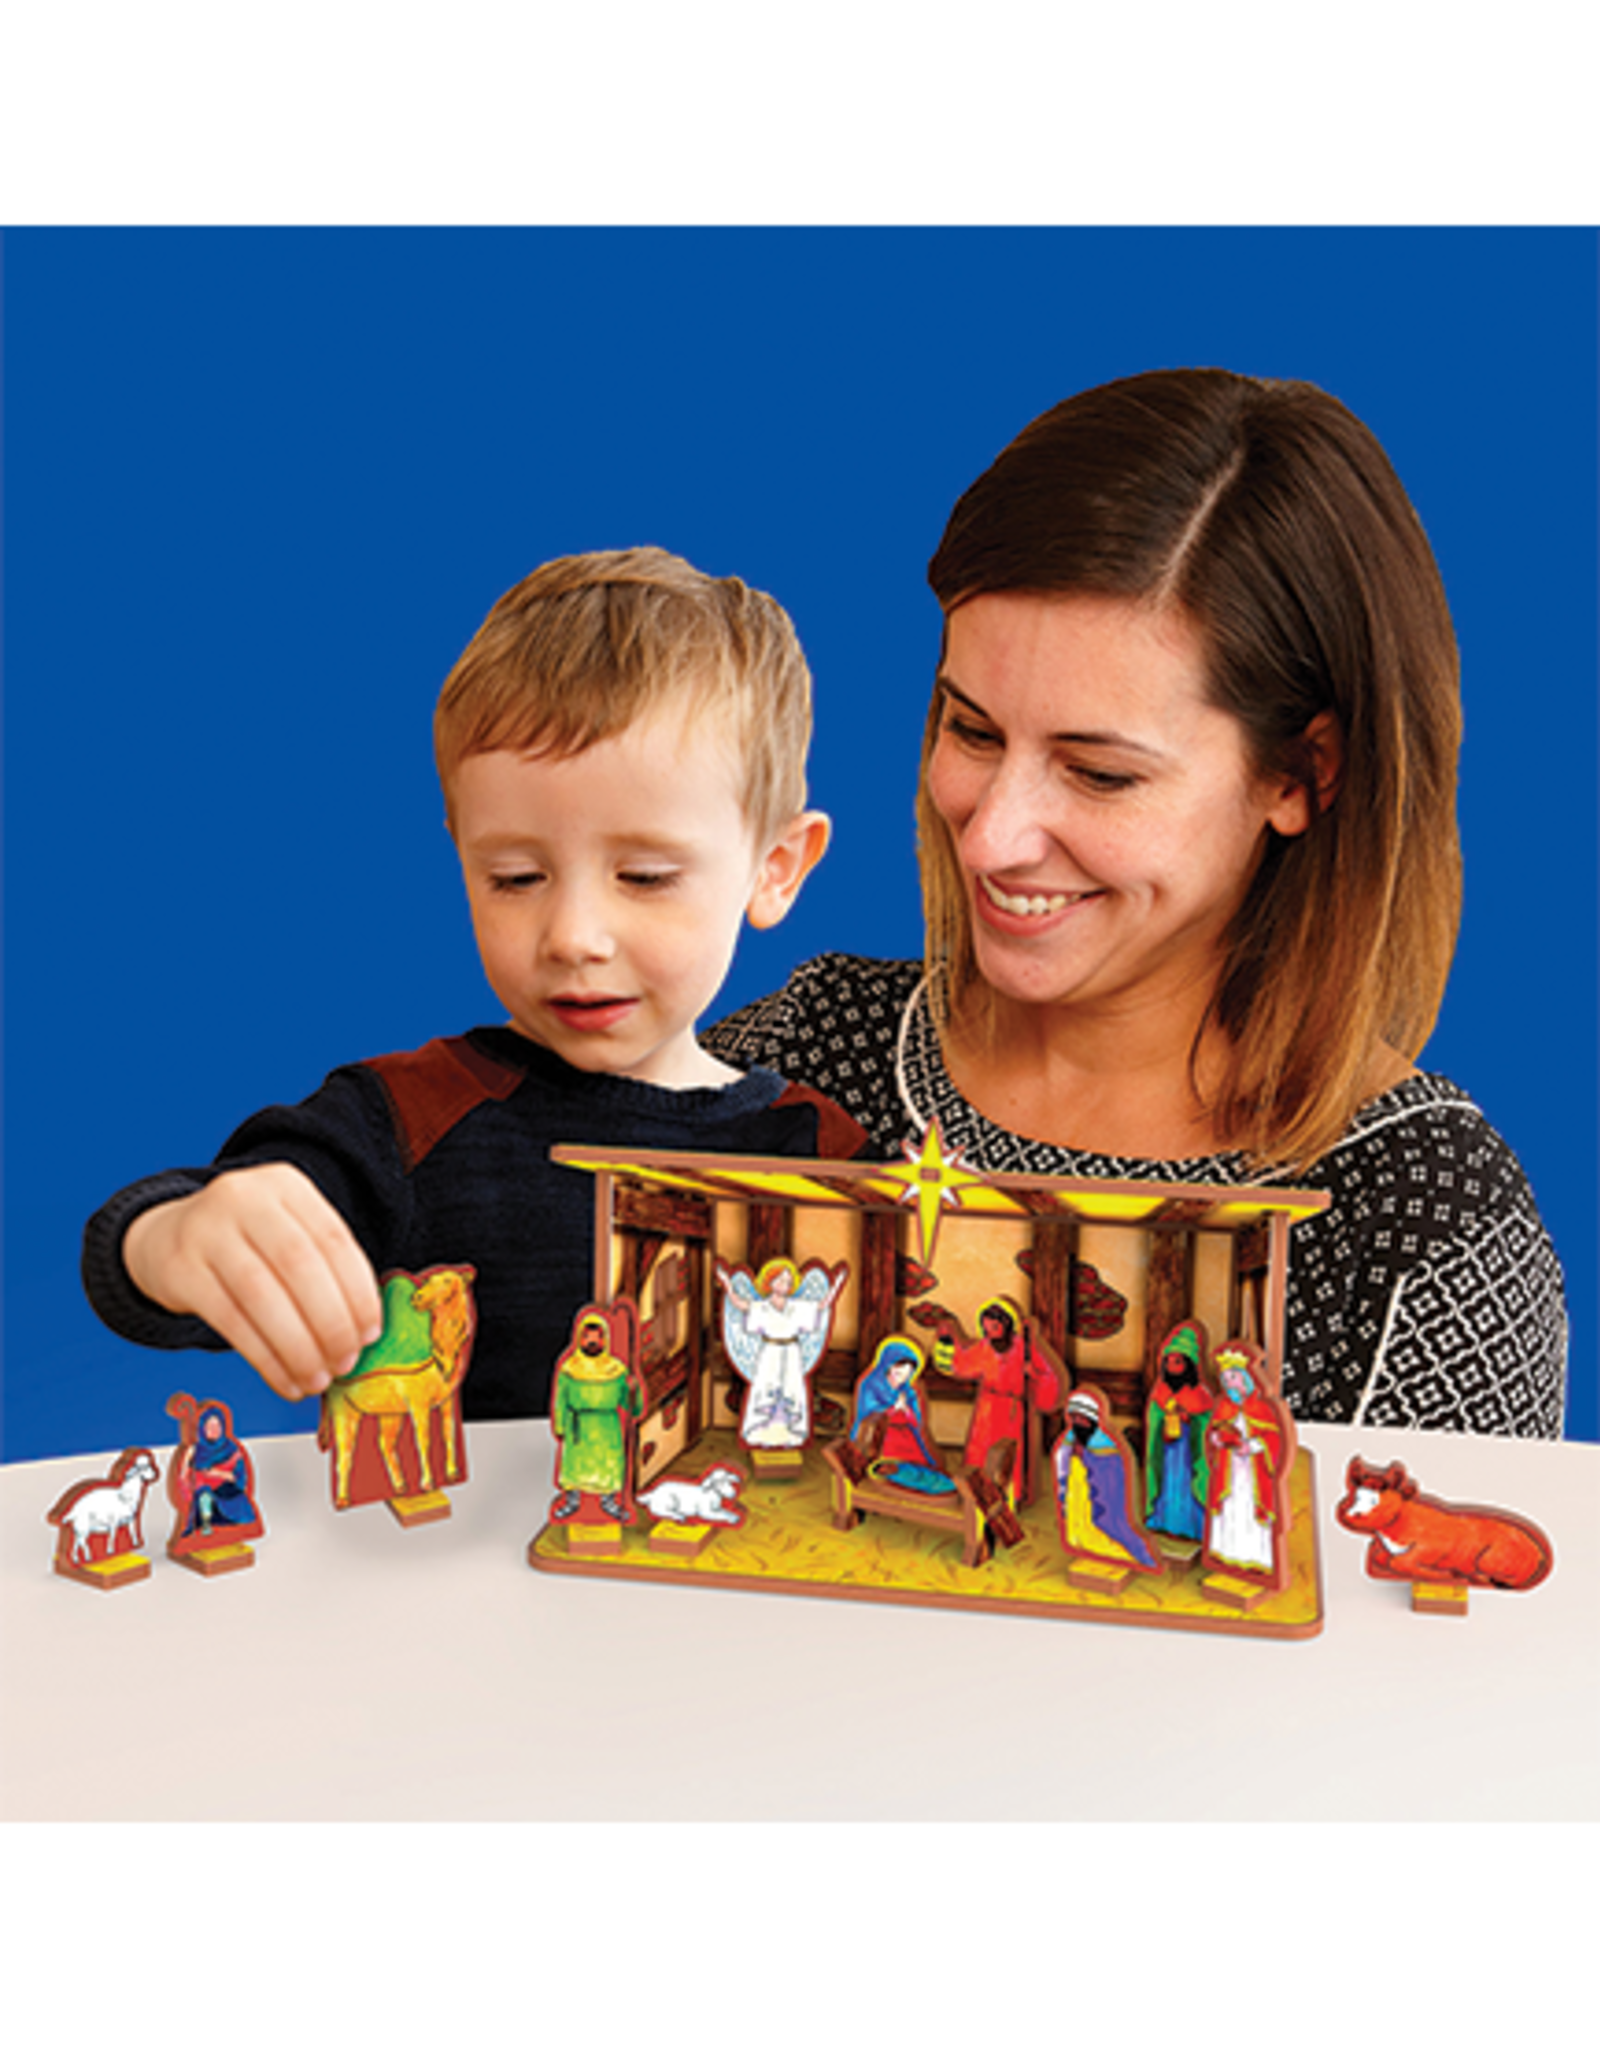 Storytime Toys Manger Nativity Book & Play Set